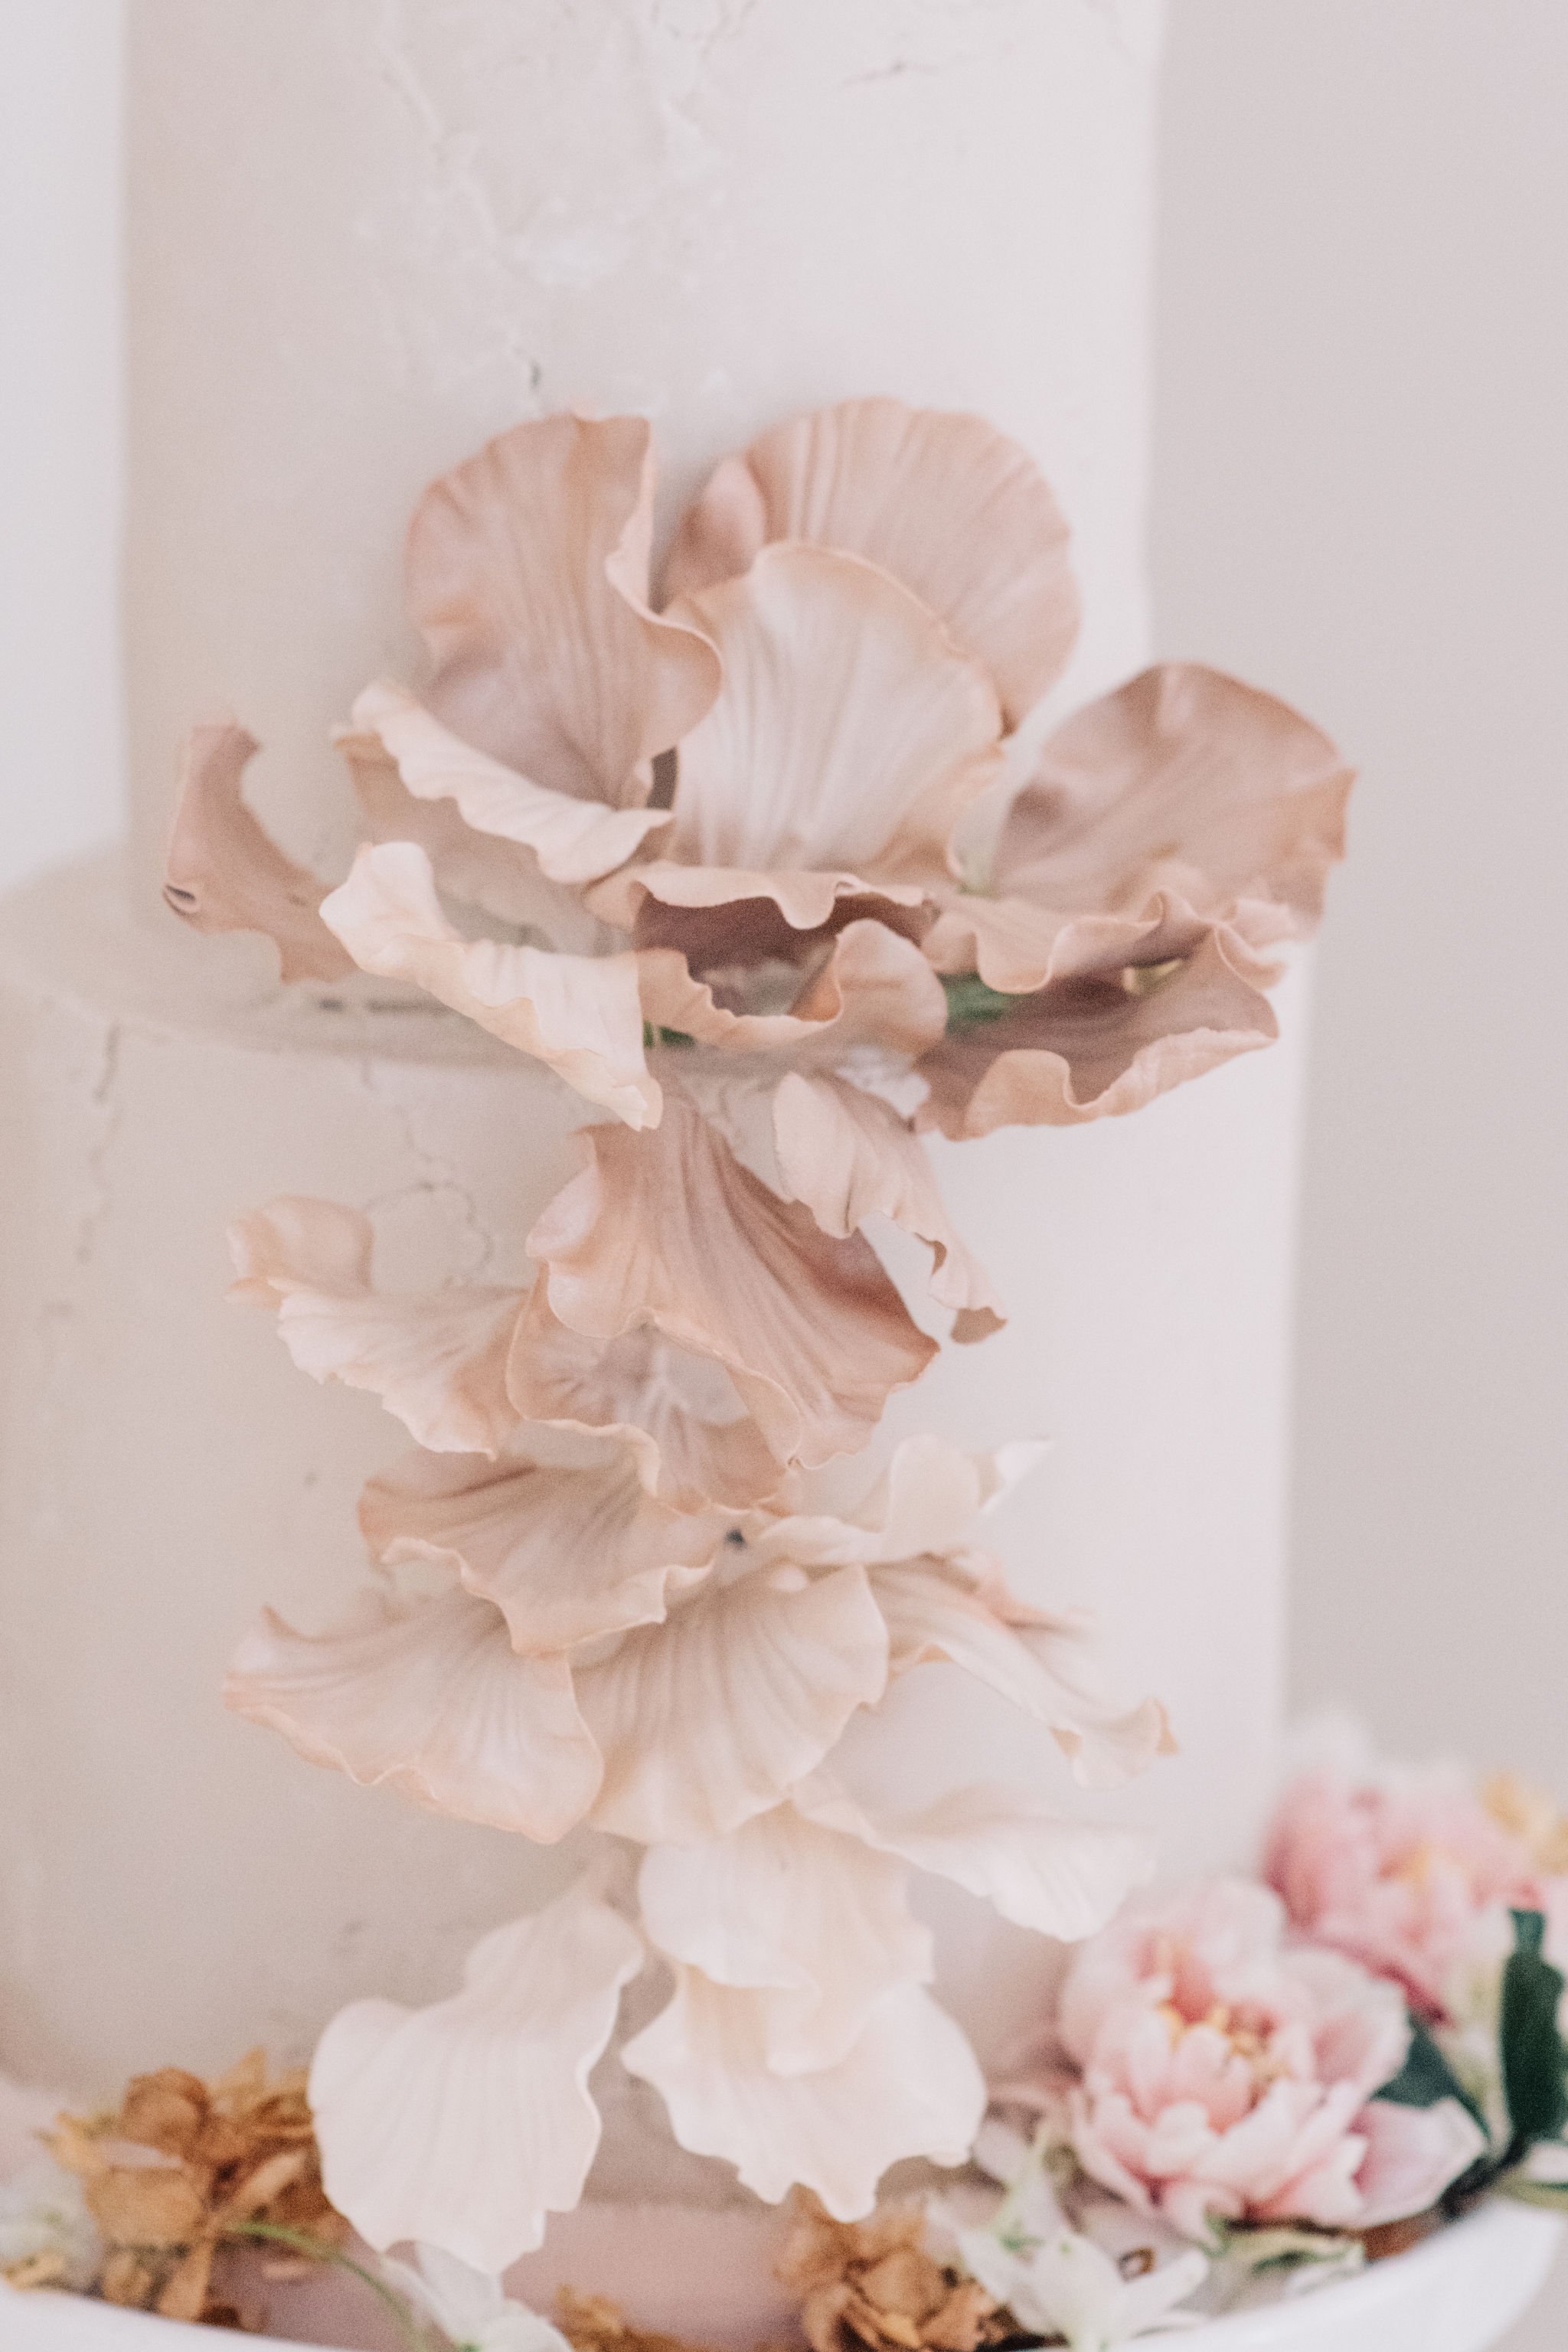 Spring-inspired fine art wedding cake for intimate wedding day photographed by Toronto wedding photographers, Ugo Photography